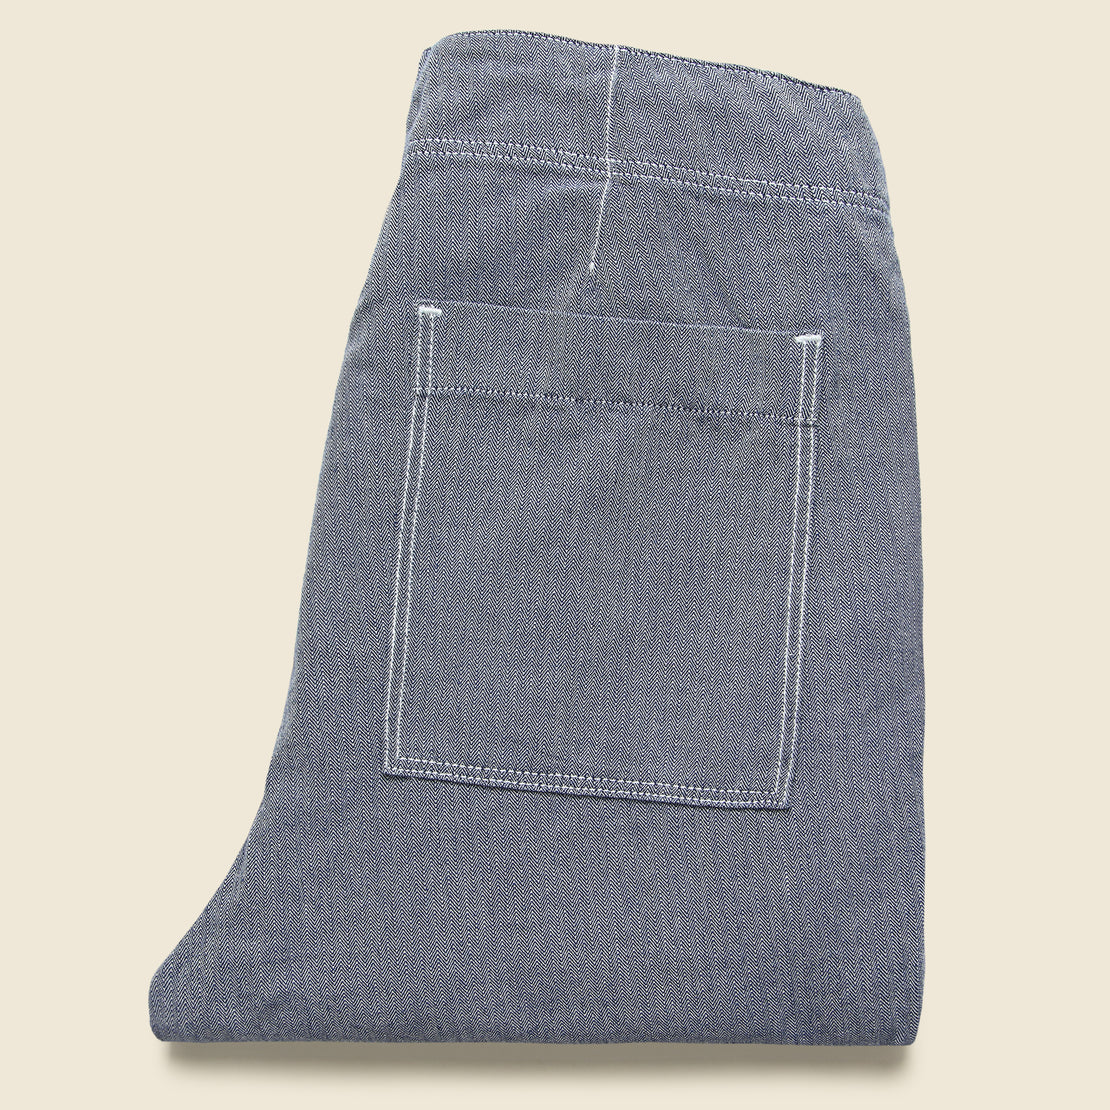 Herringbone Garden Pant - Blue - Save Khaki - STAG Provisions - Pants - Twill